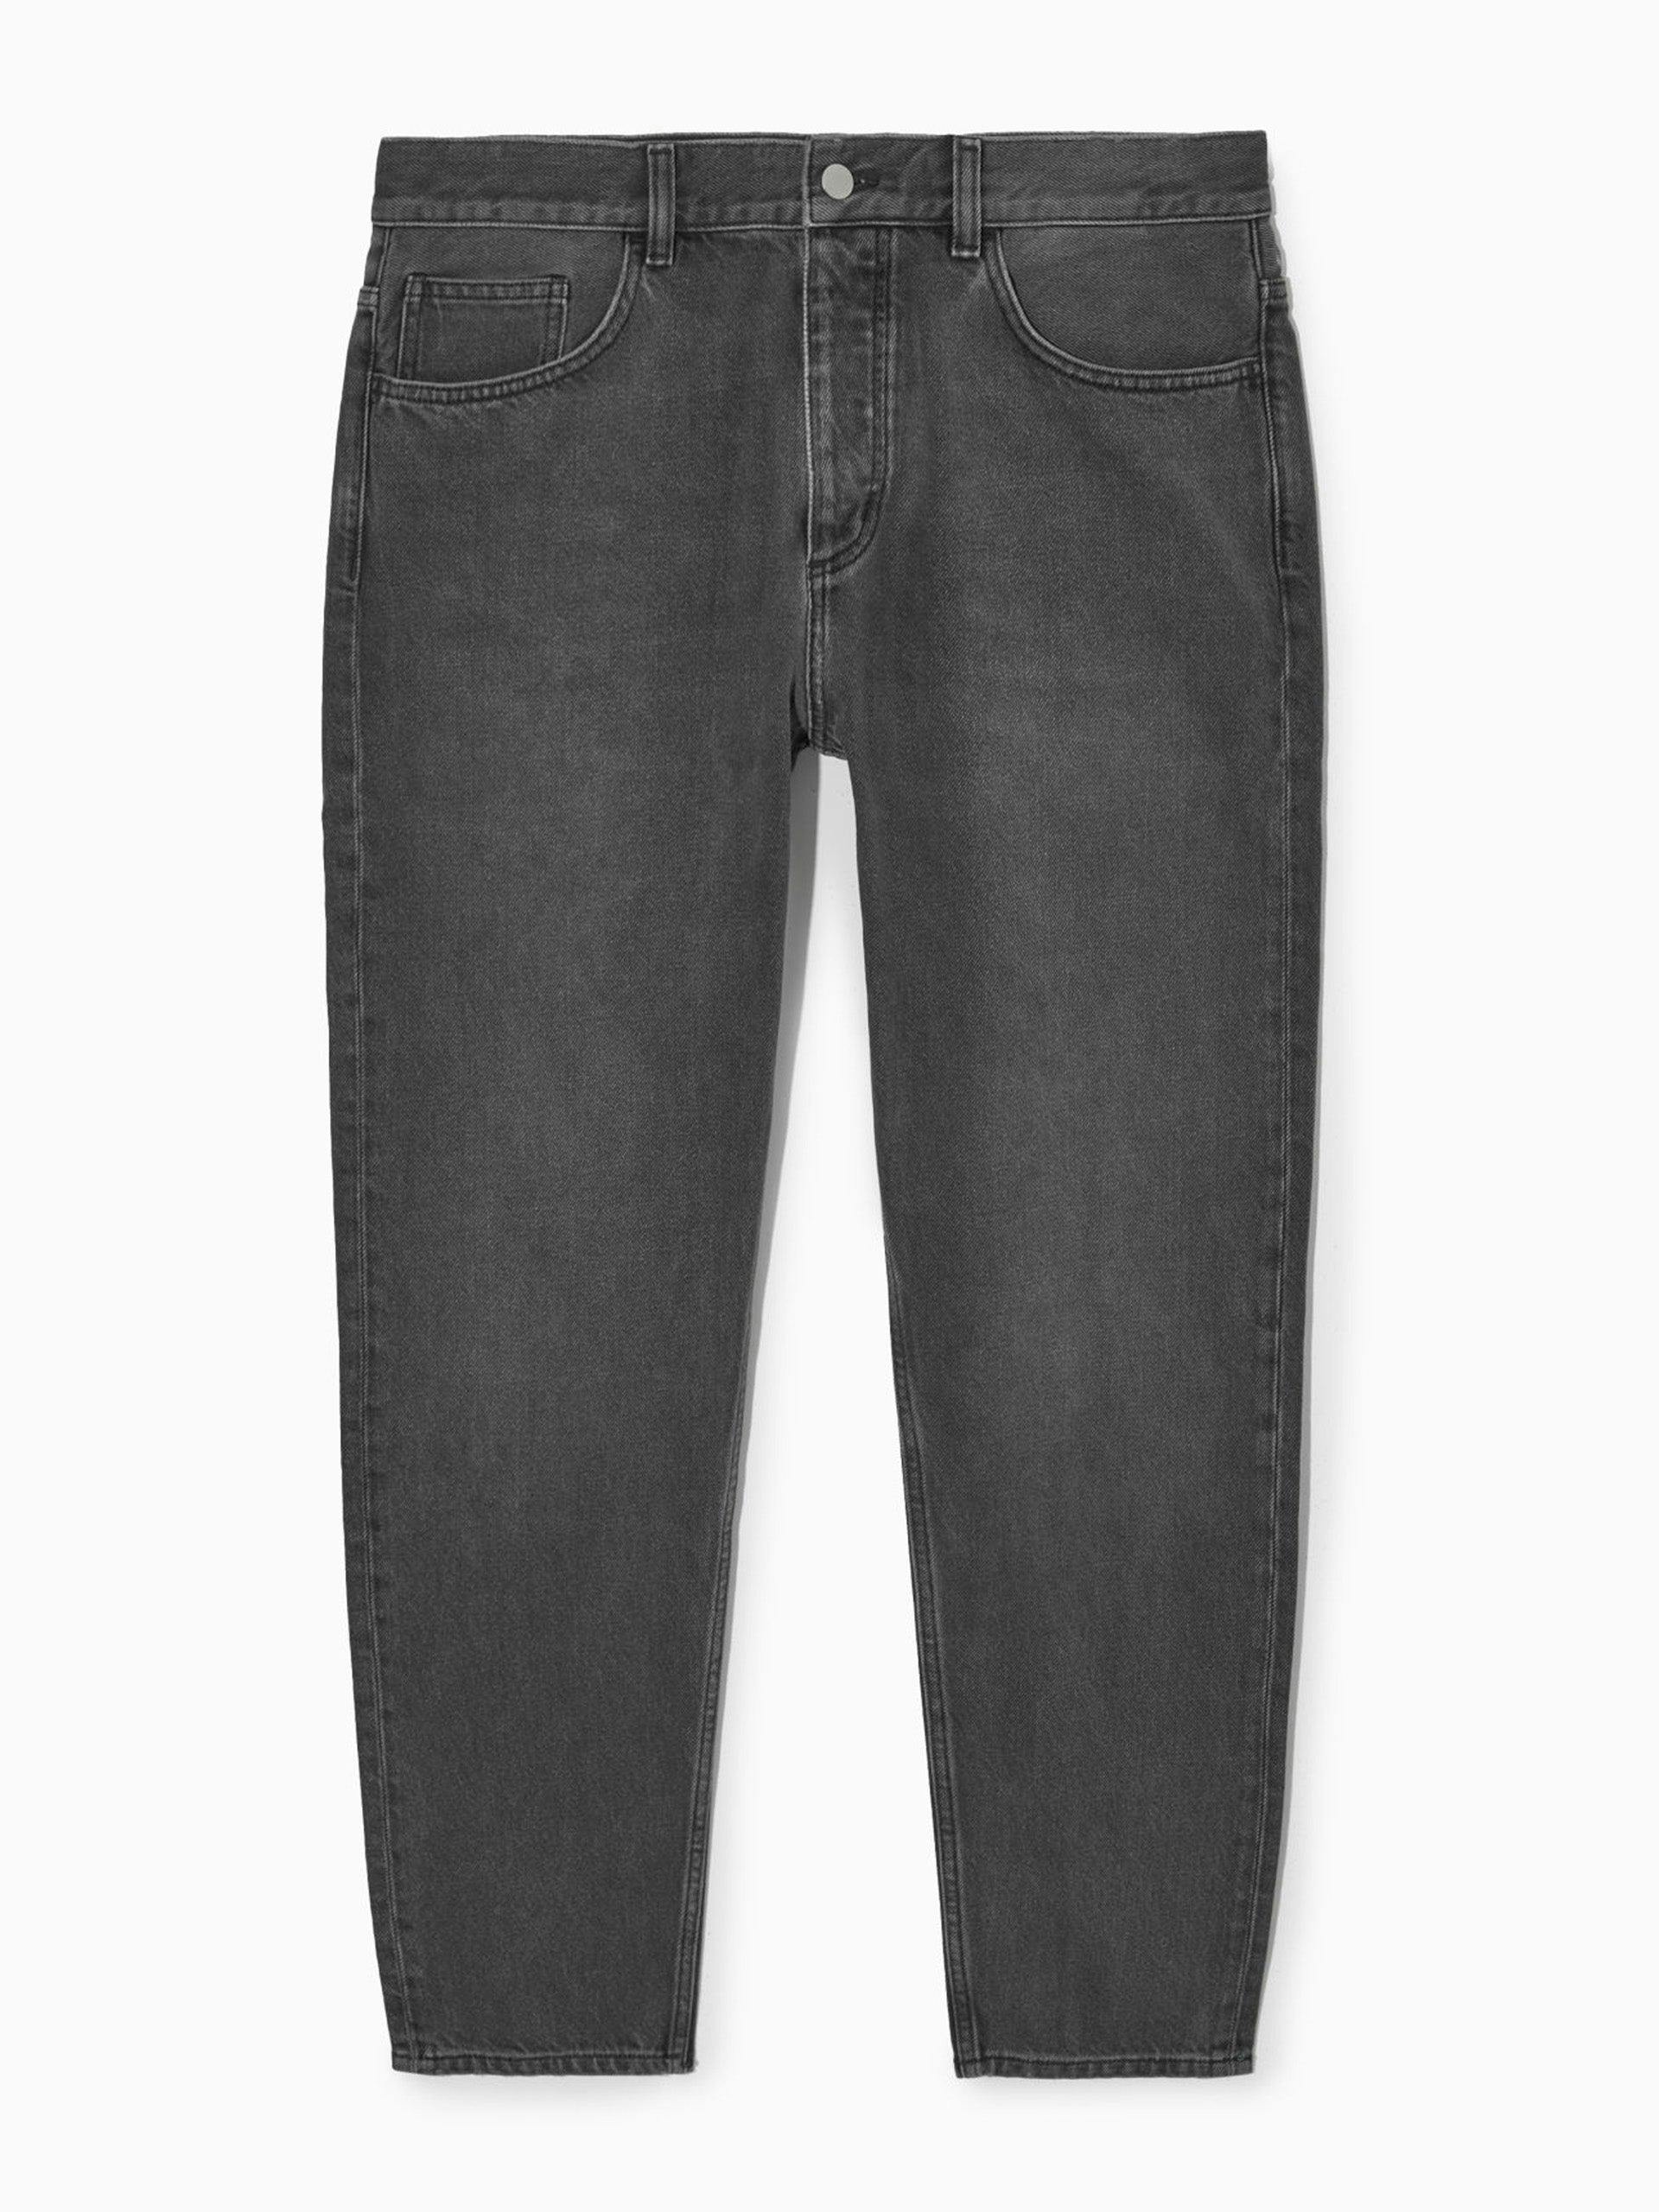 Tapered-leg dark grey jeans